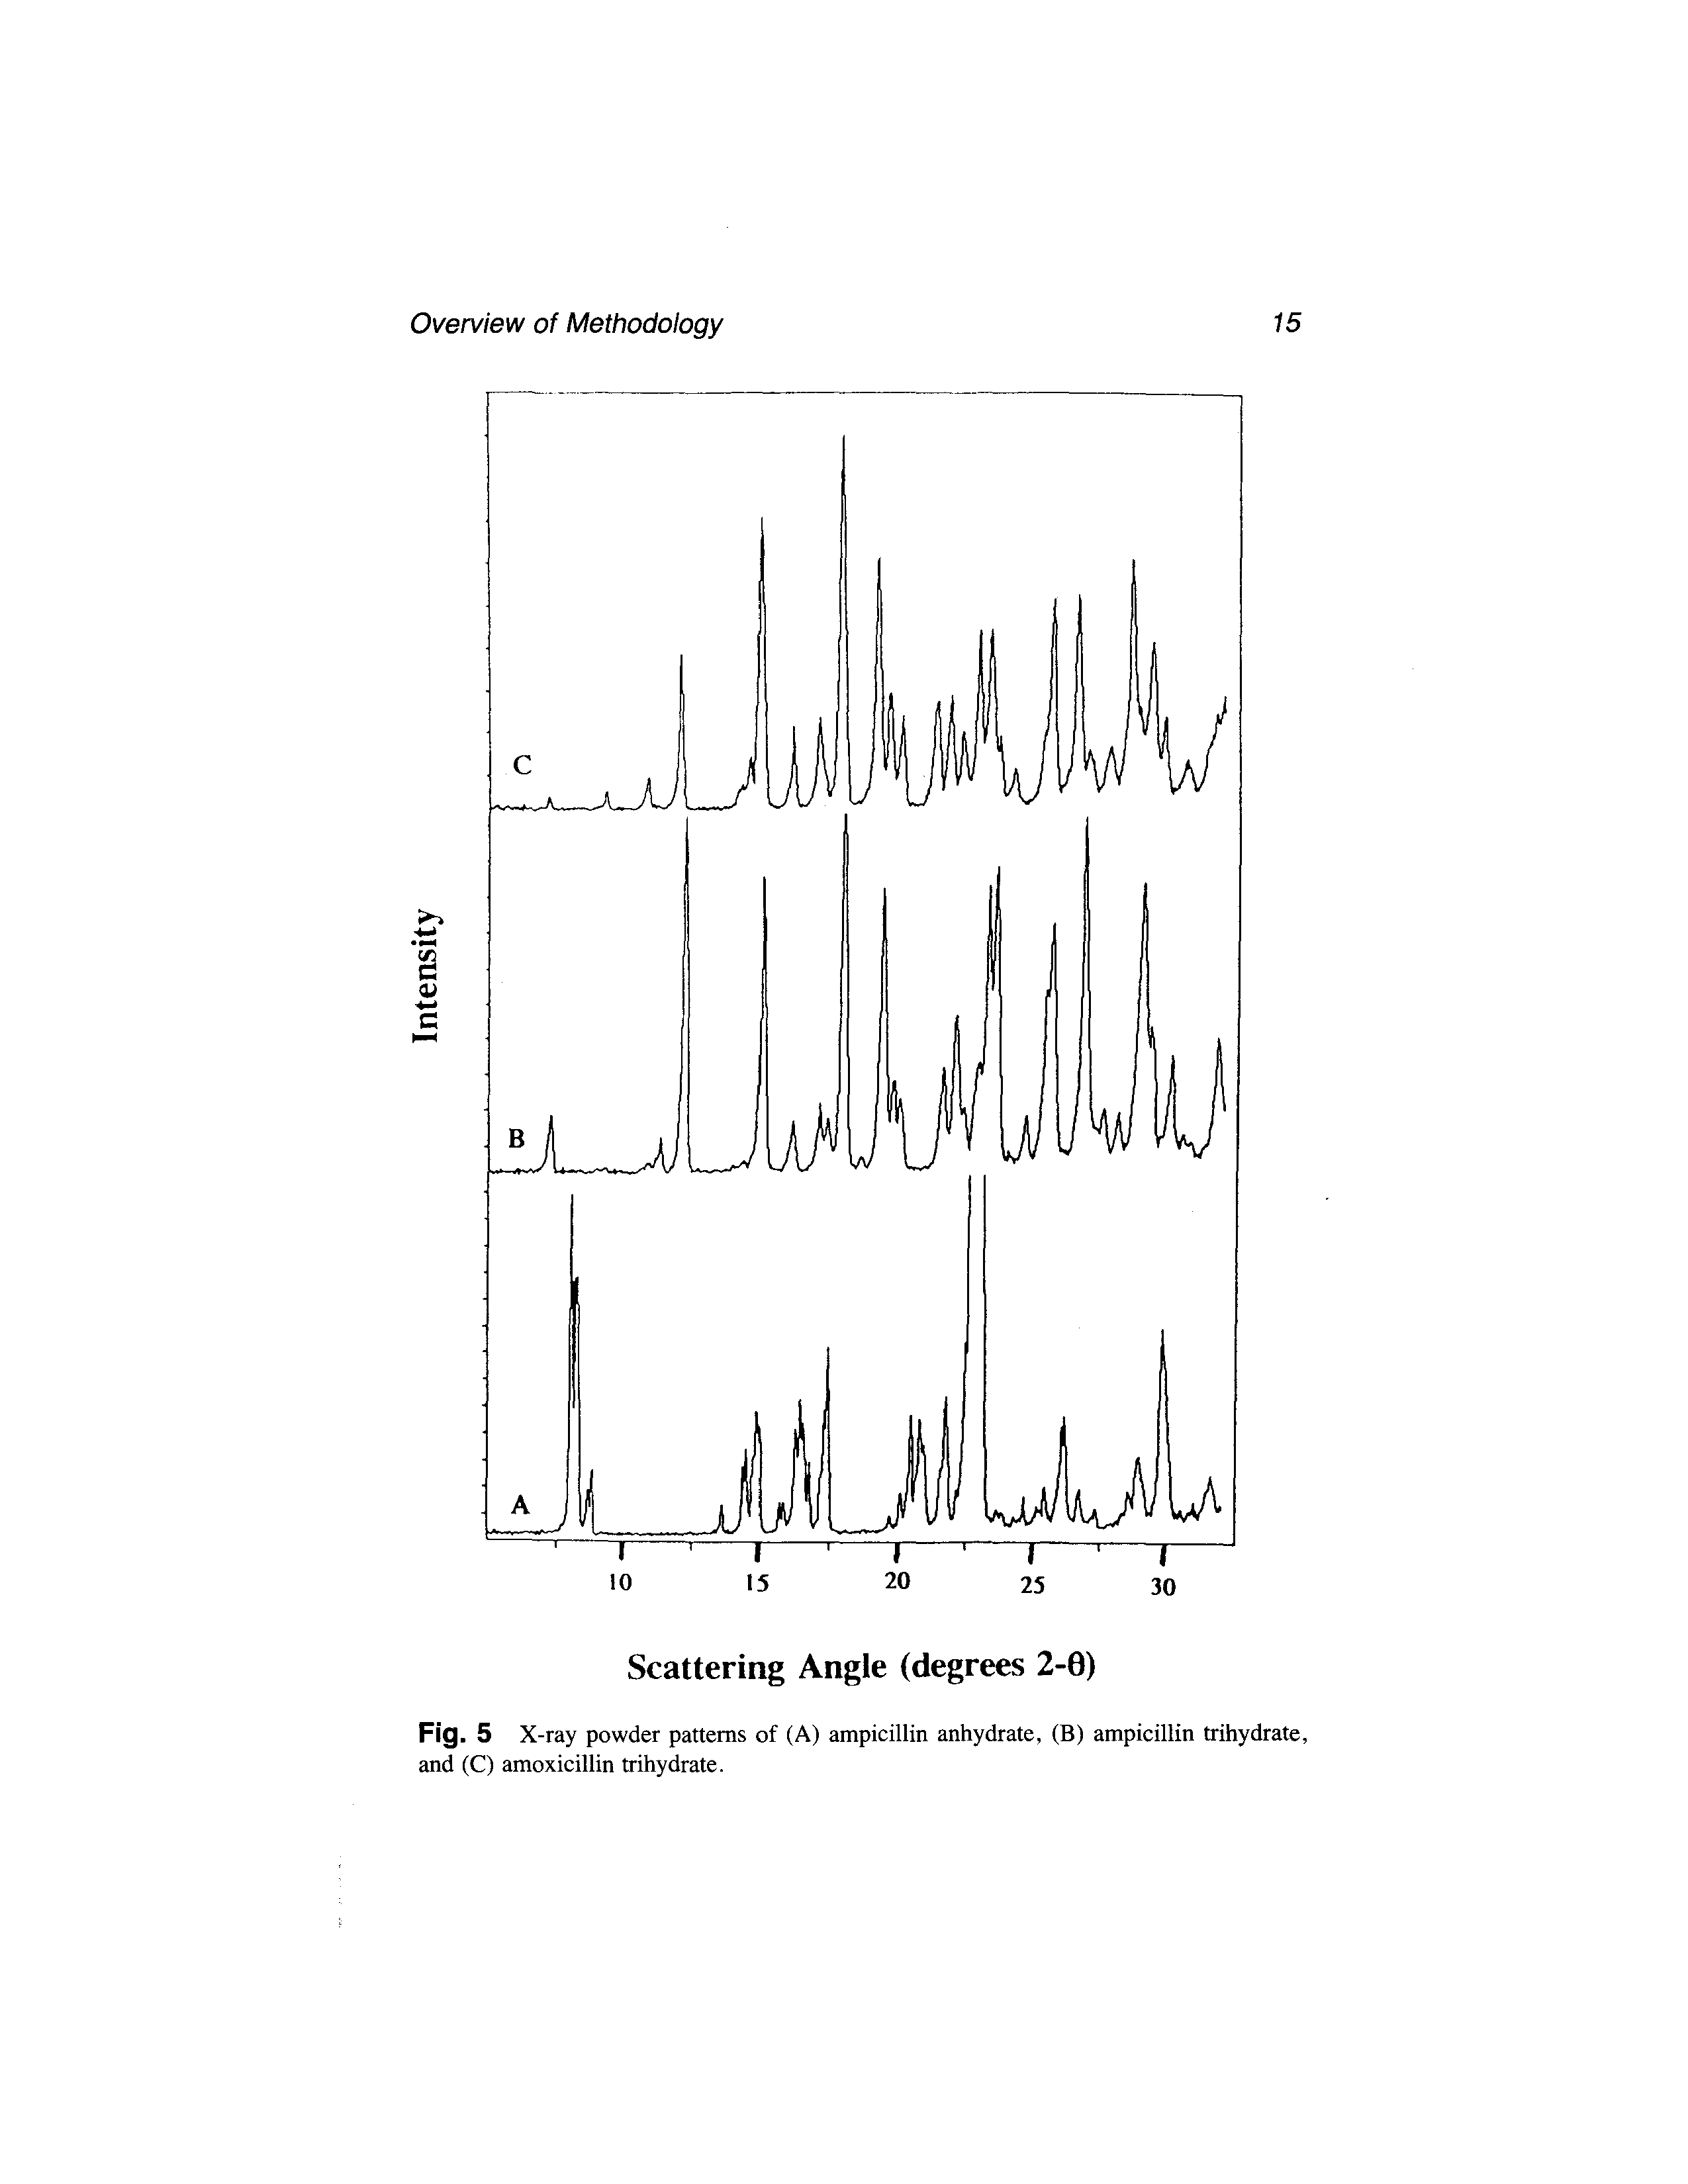 Fig. 5 X-ray powder patterns of (A) ampicillin anhydrate, (B) ampicillin trihydrate, and (C) amoxicillin trihydrate.